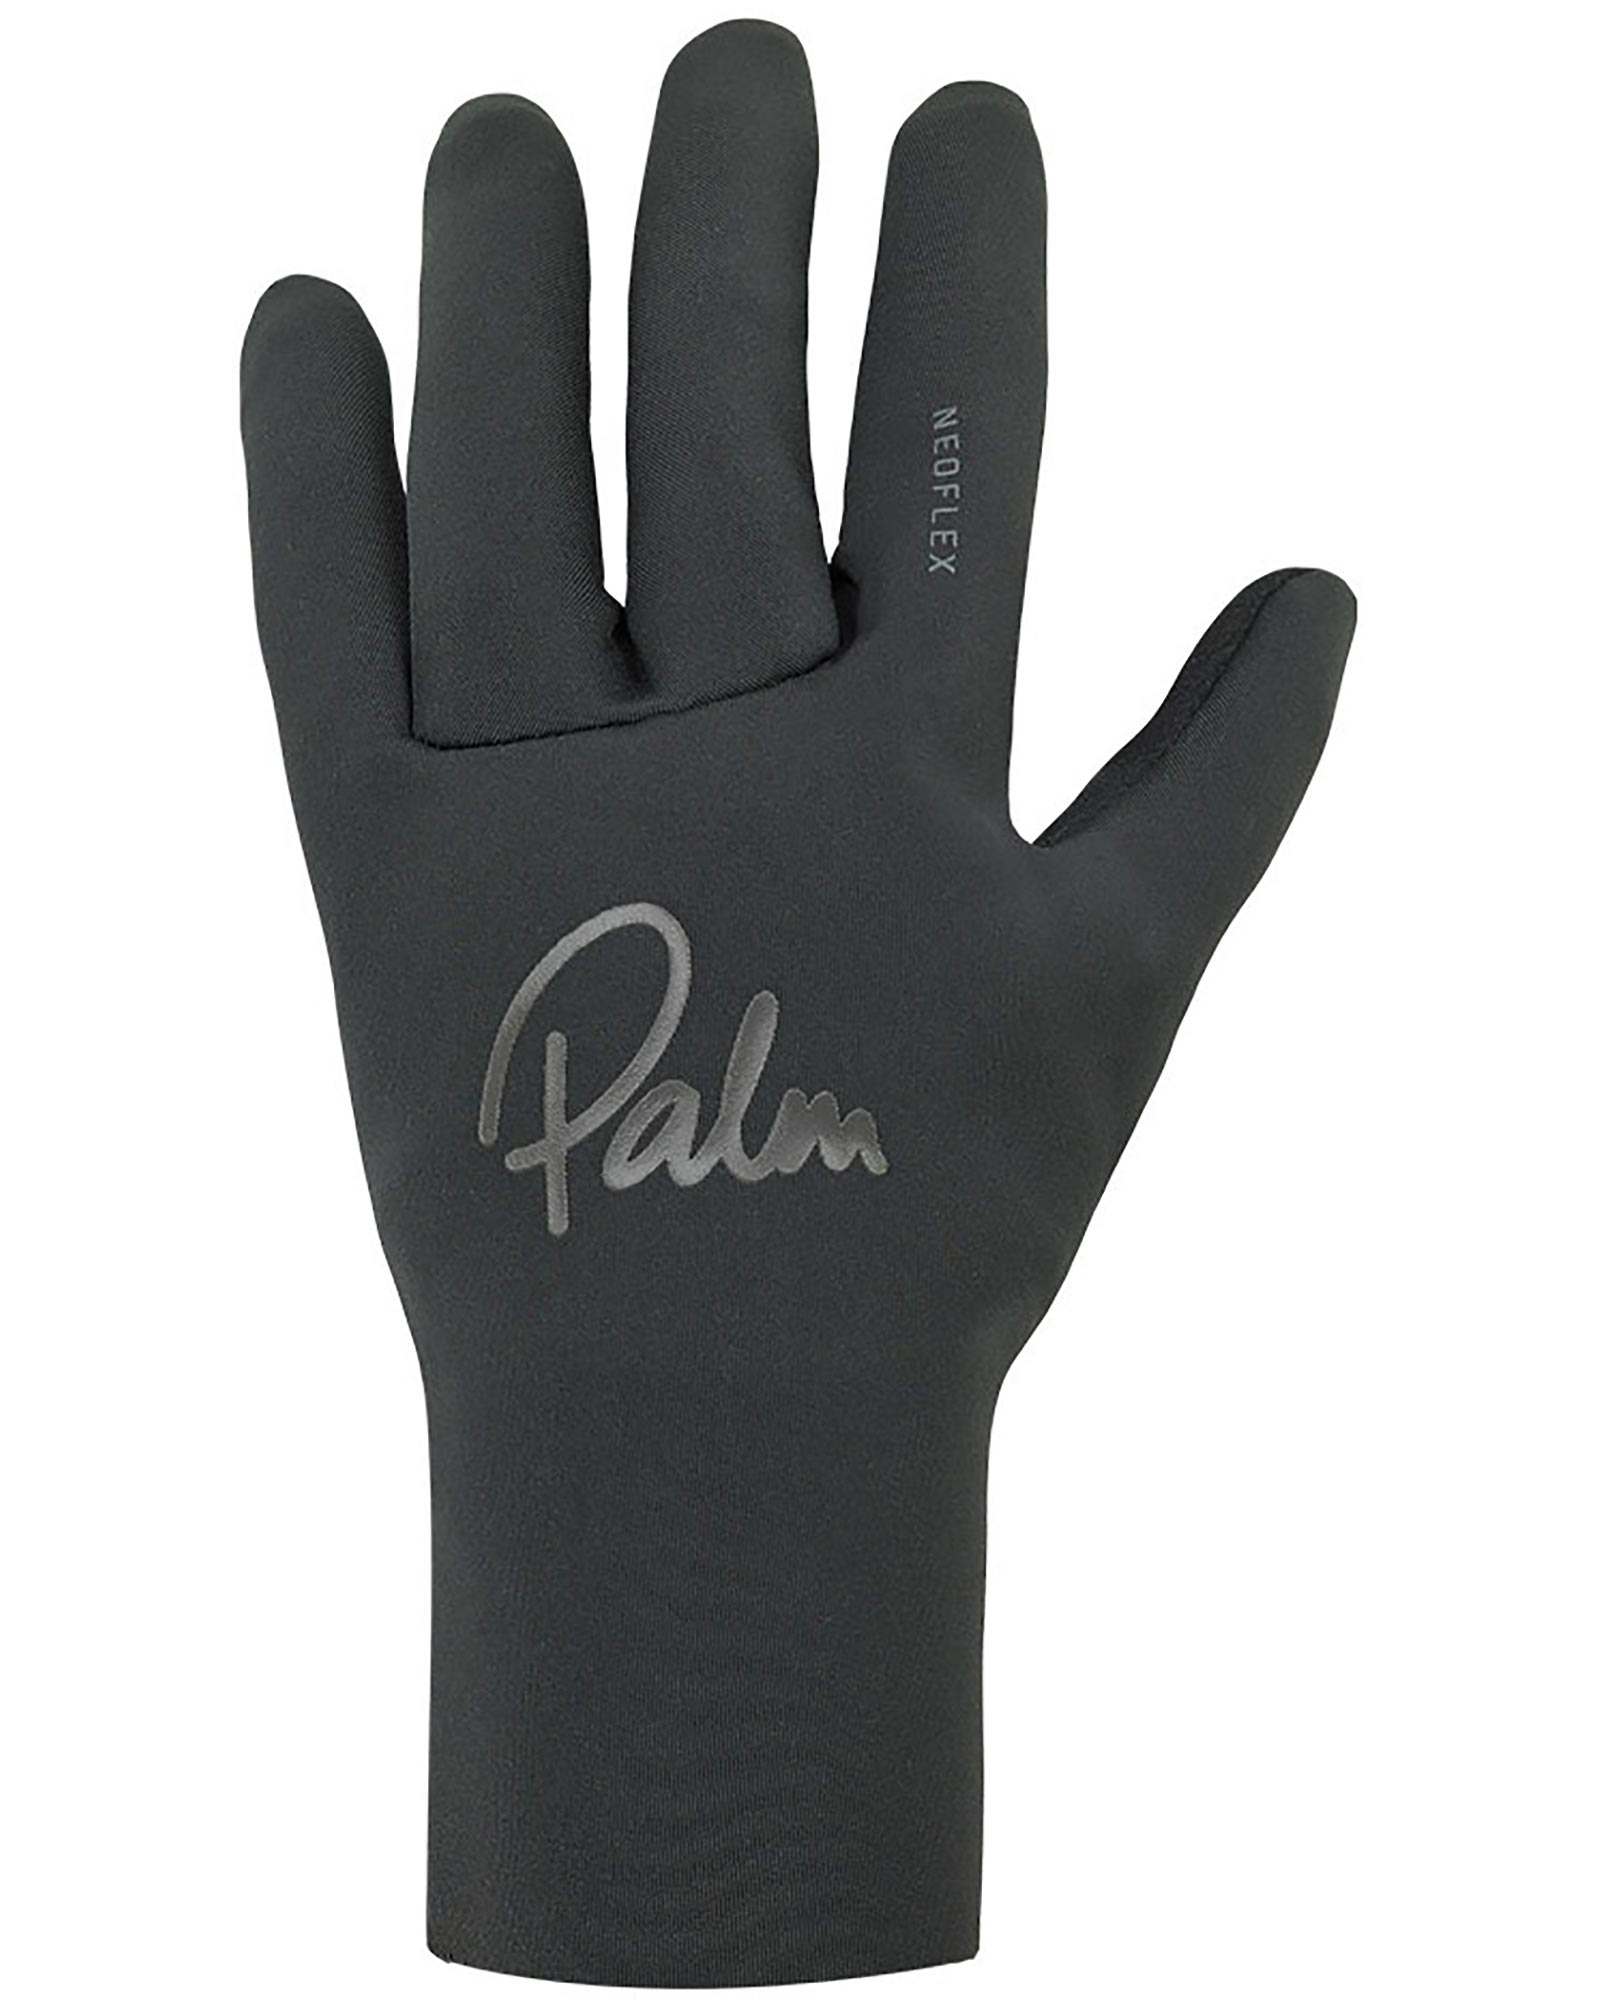 Palm NeoFlex Gloves 0